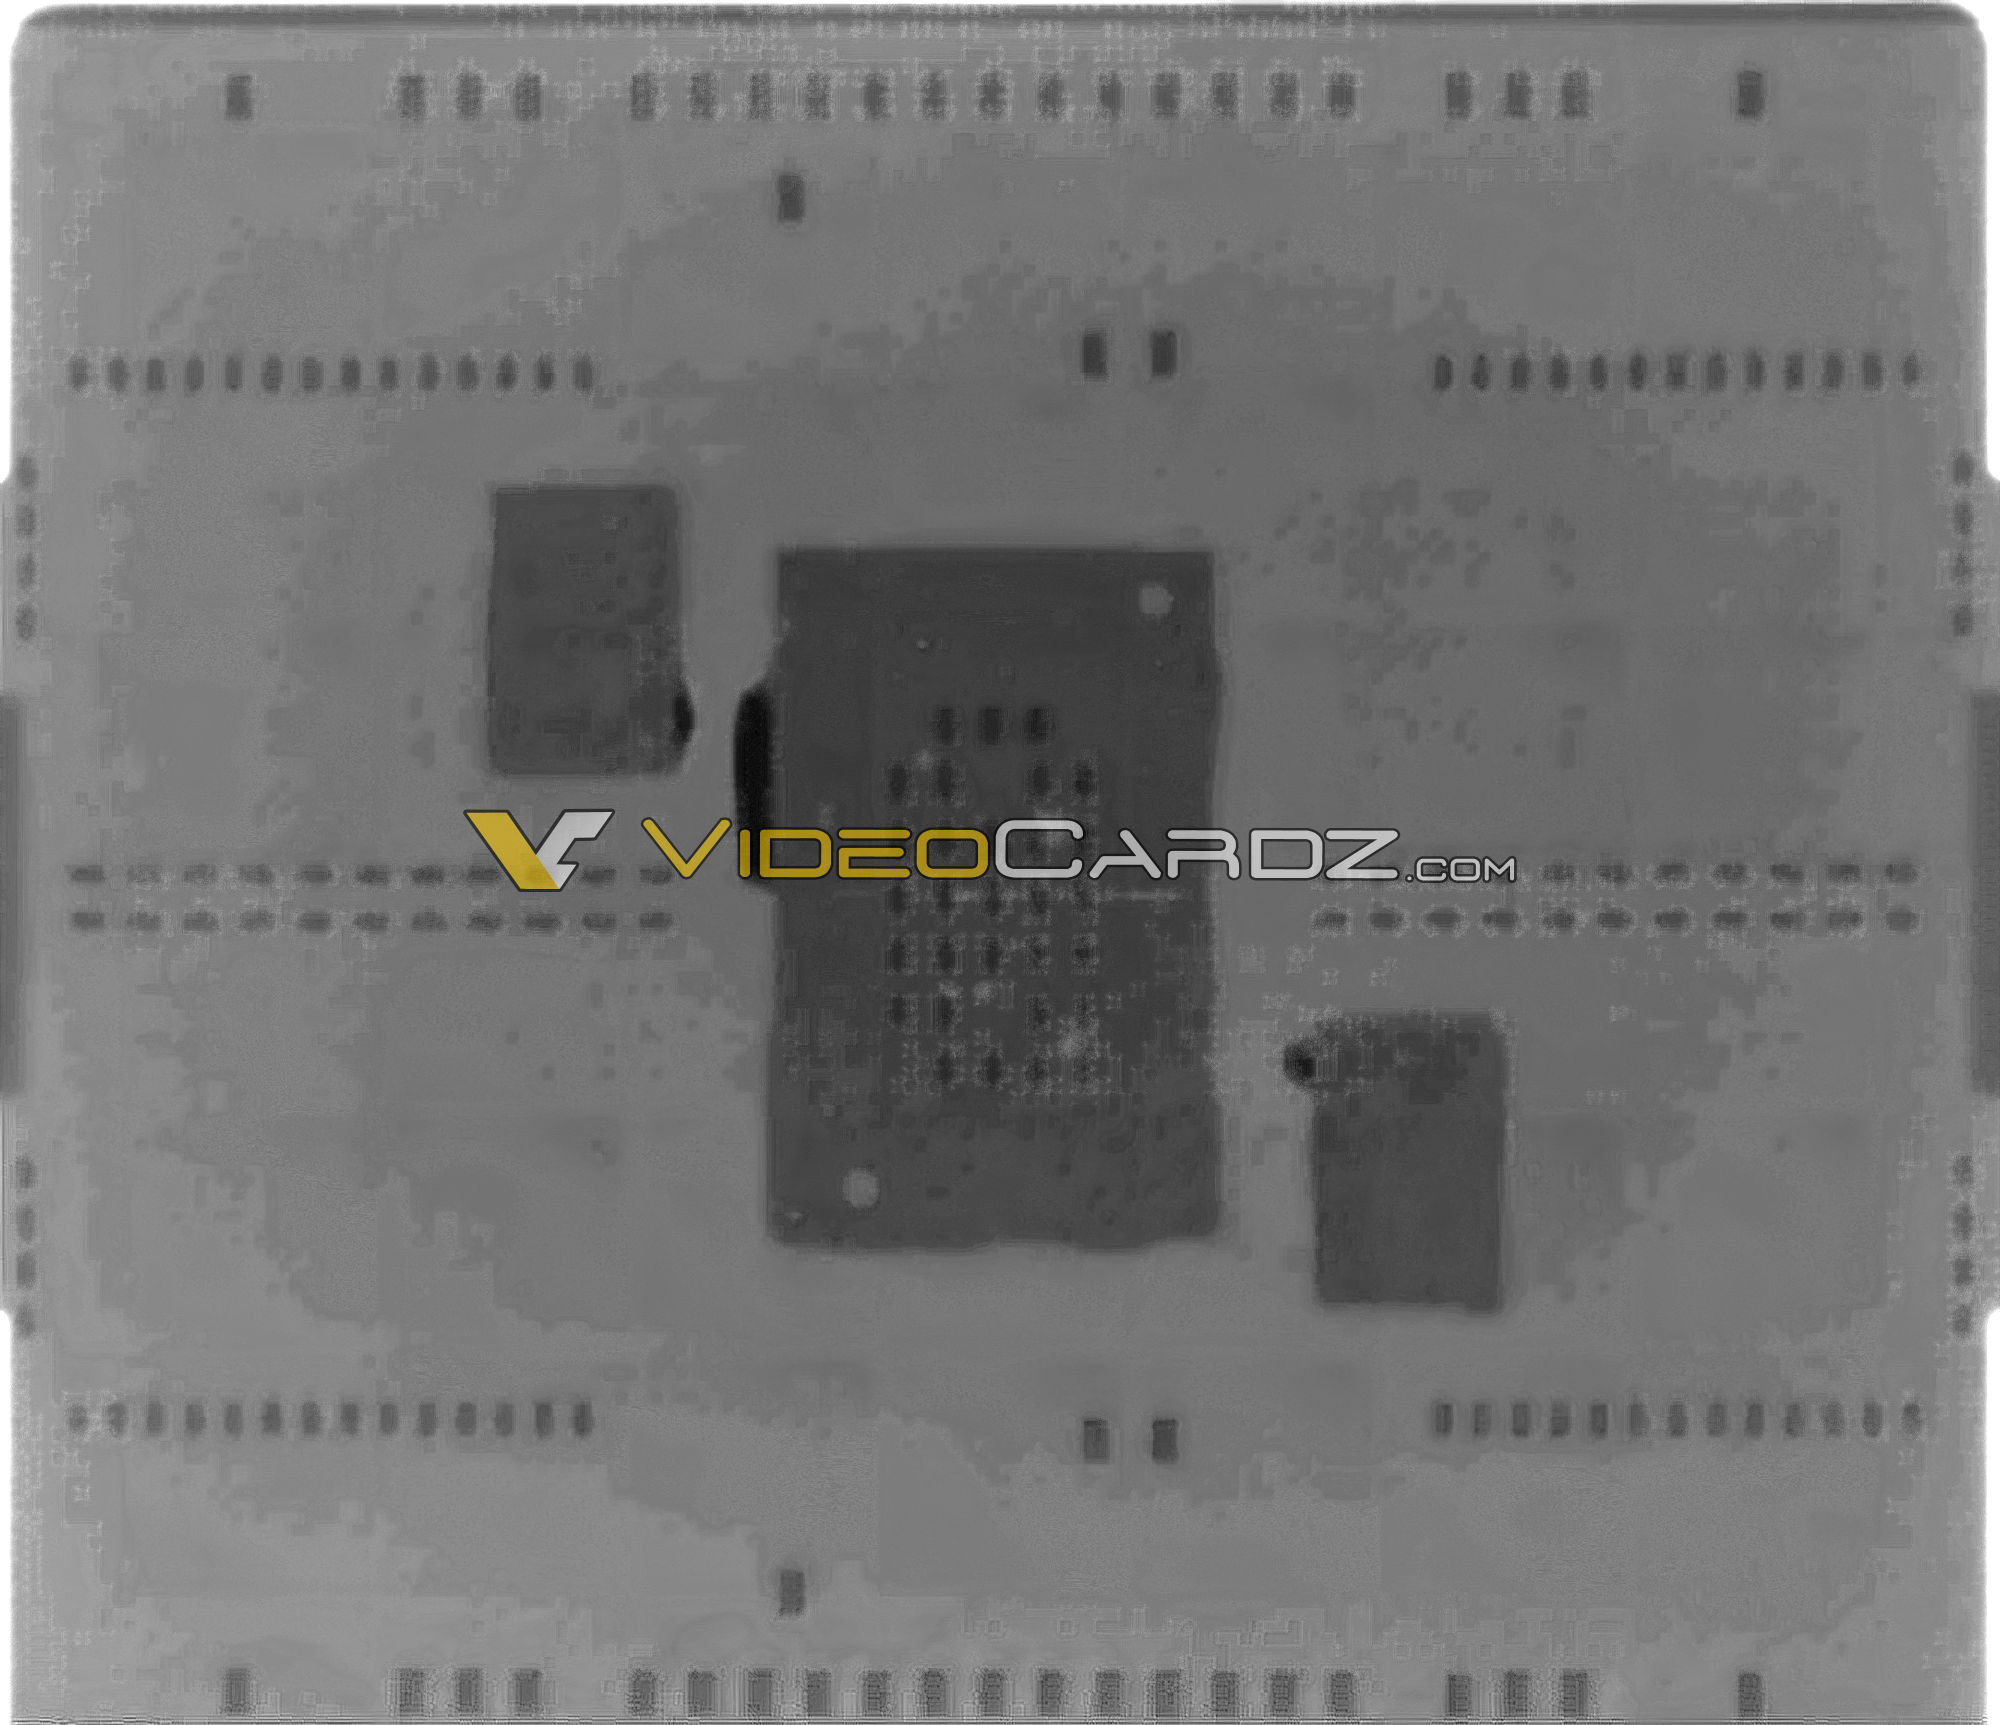 amd epyc genoa zen4 xray หลุดภาพซีพียู AMD EPYC รุ่นใหญ่สถาปัตย์ ZEN4 ขนาด 5nm รหัส “Genoa” รุ่นใหม่ล่าสุดรองรับแรม DDR5 และ PCIe Gen5  